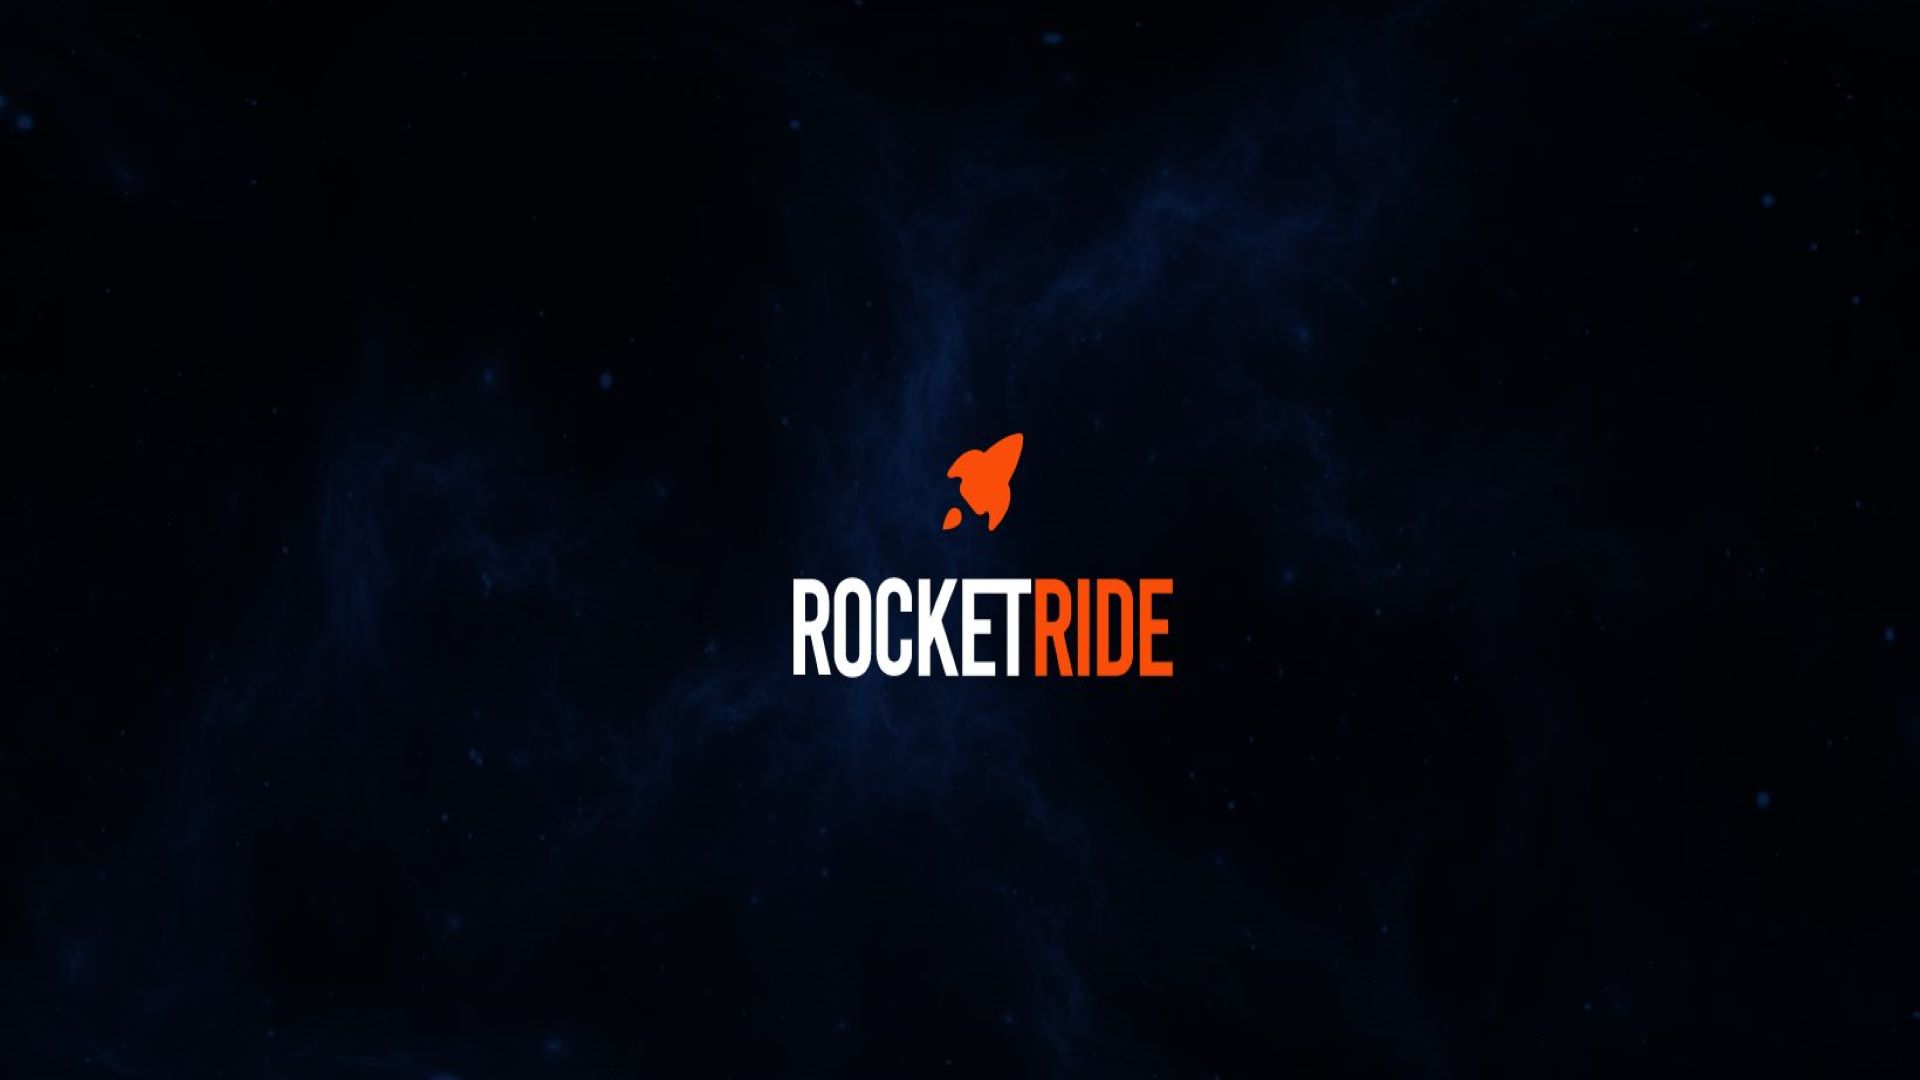 rocketride games logo  Image of rocketride games logo